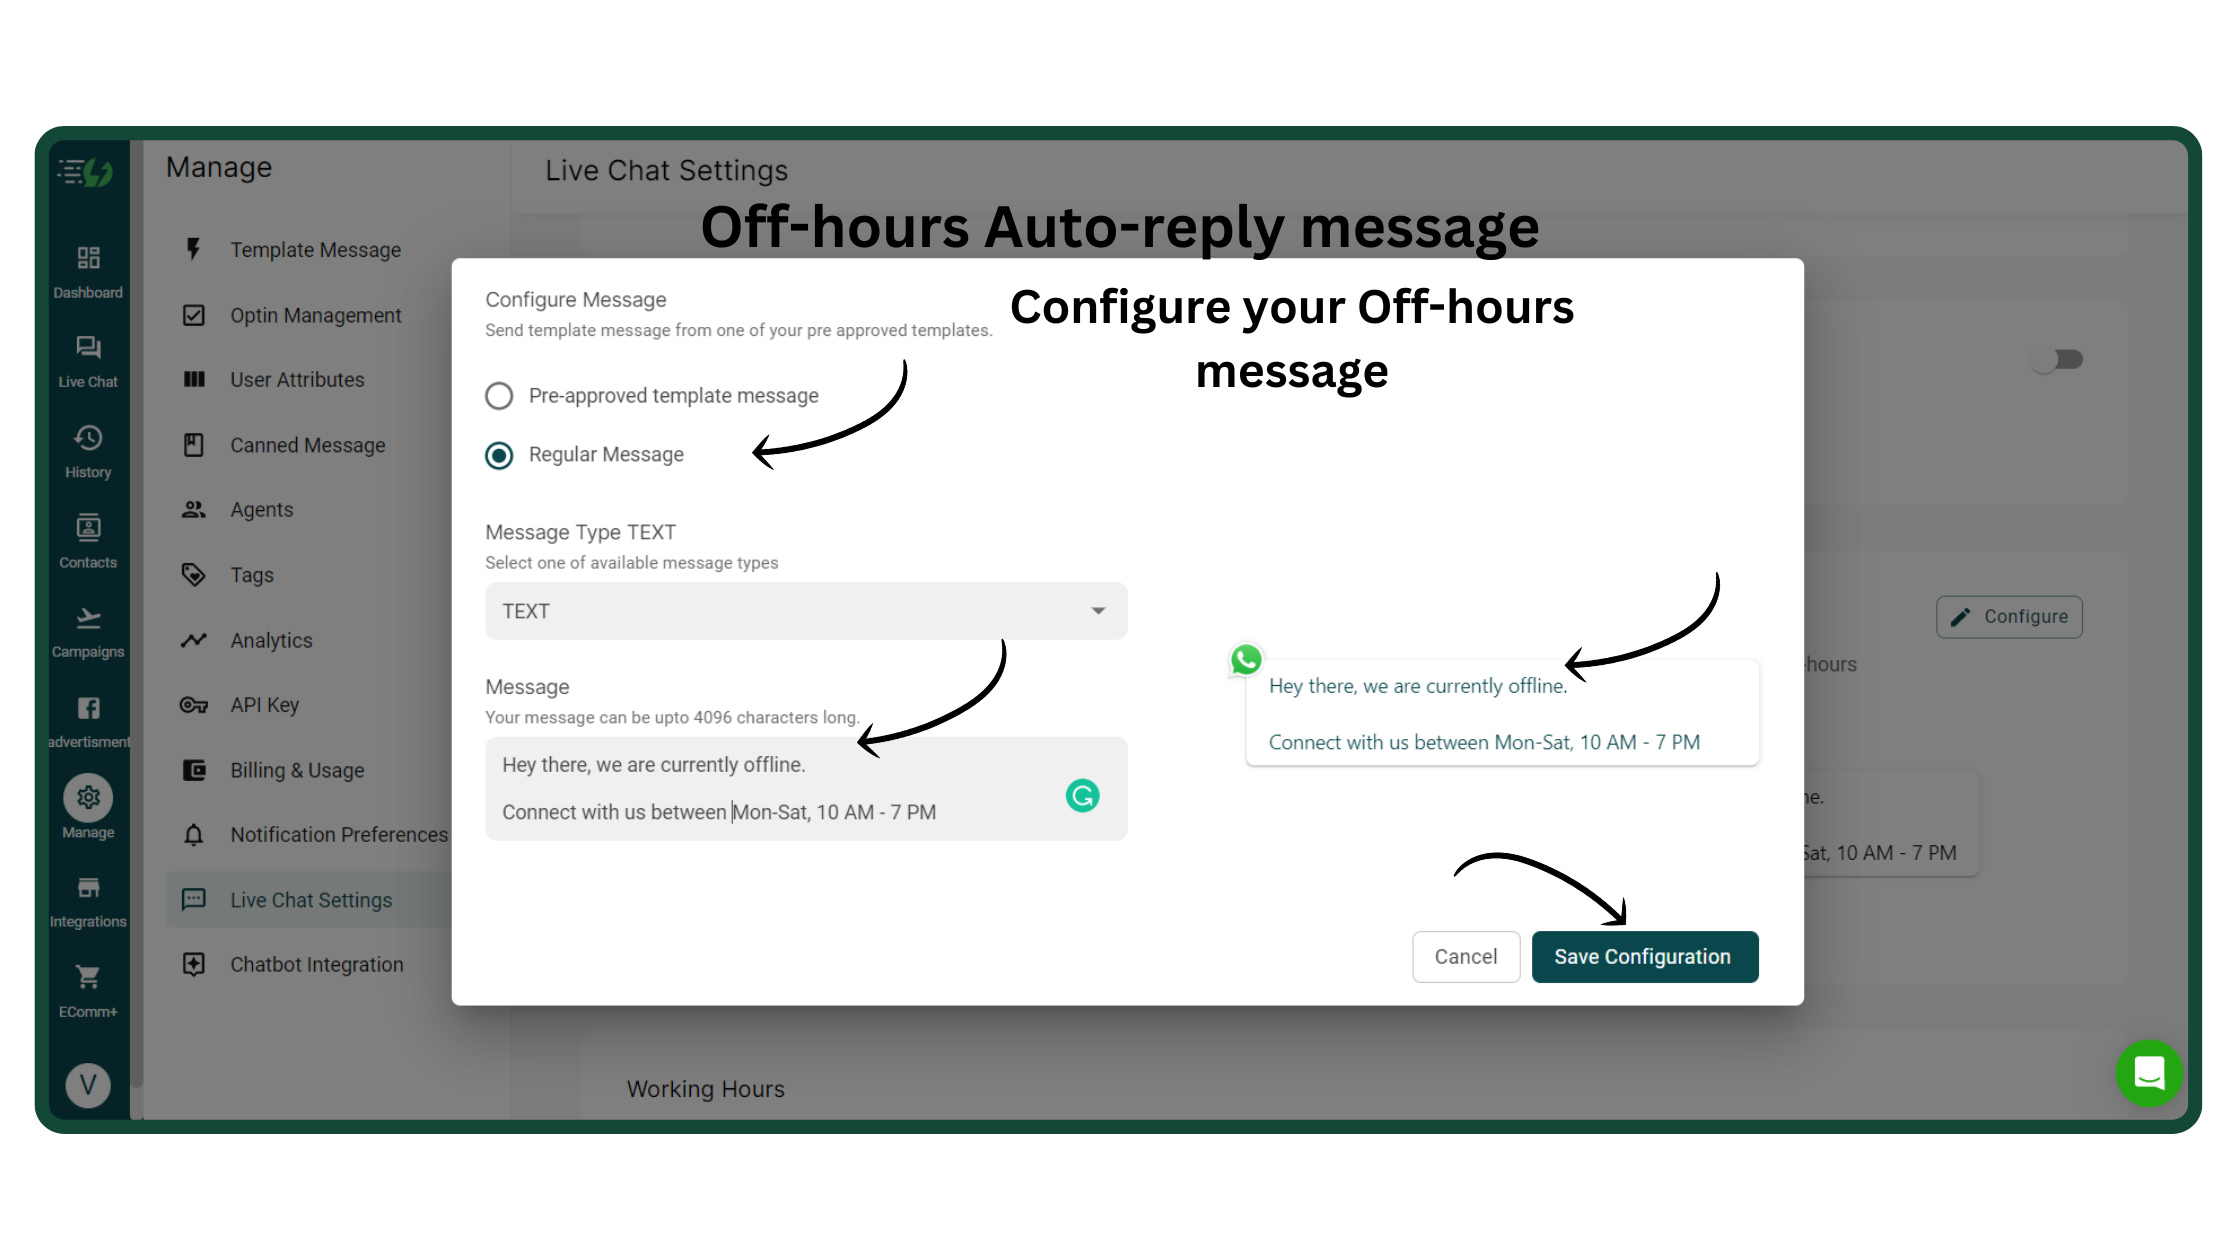 Configure Off-hours message